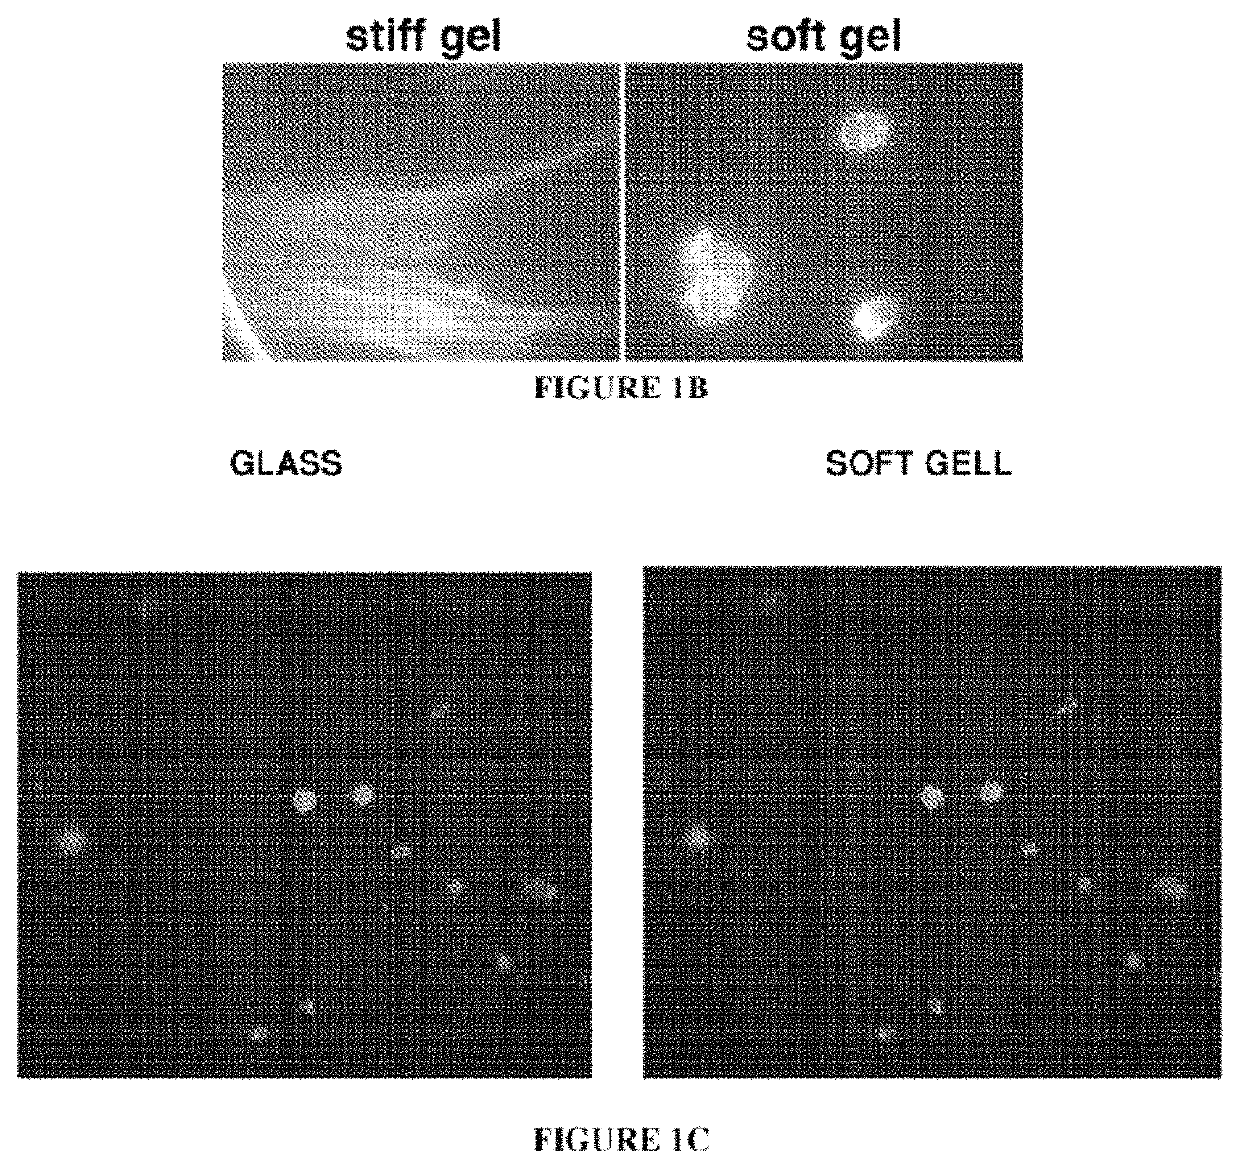 Soft gel systems in modulating stem cell development